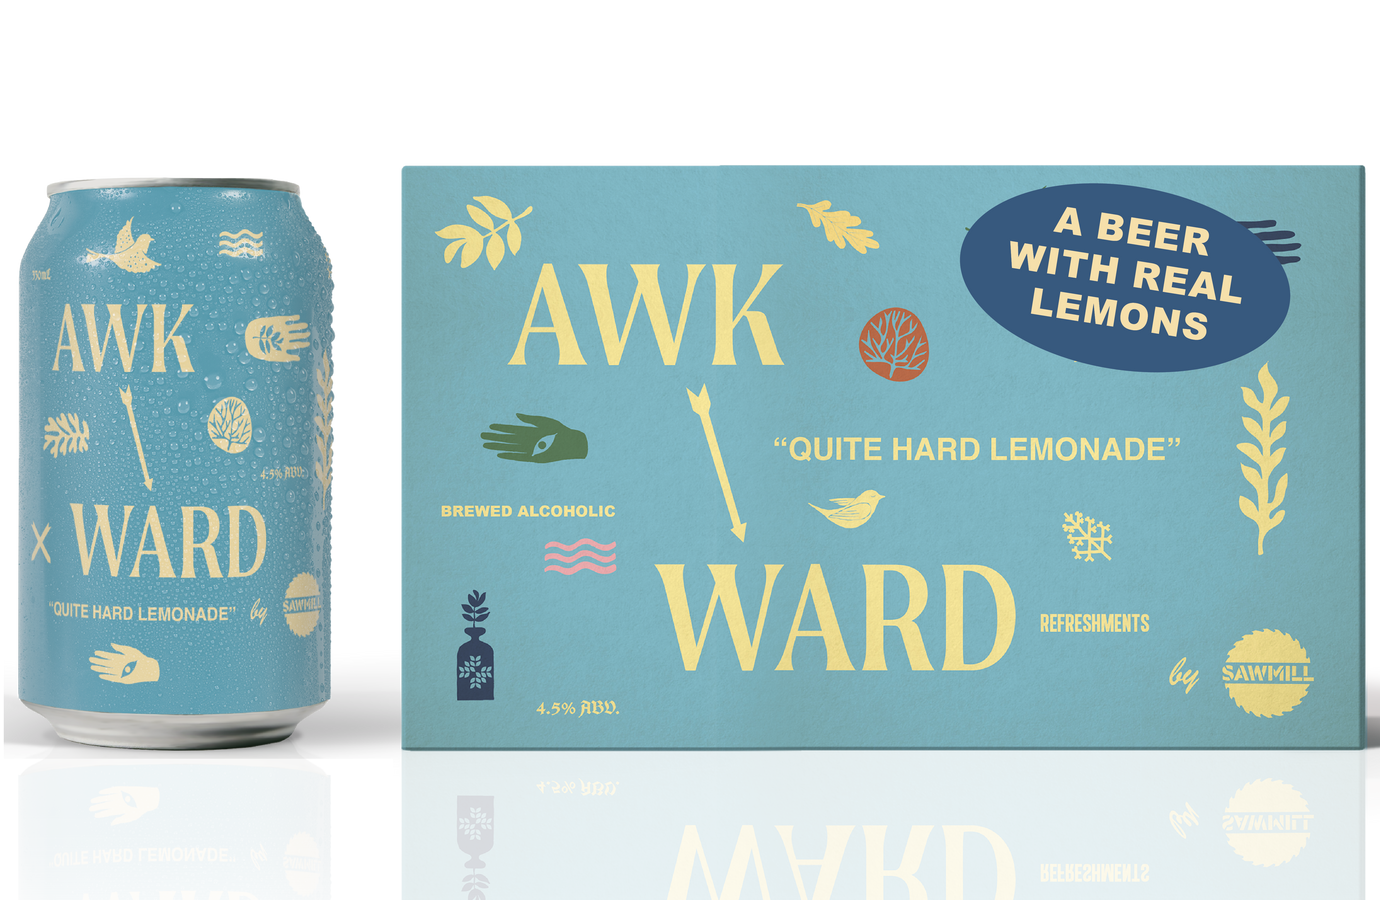 AWKWARD Quite Hard Lemonade